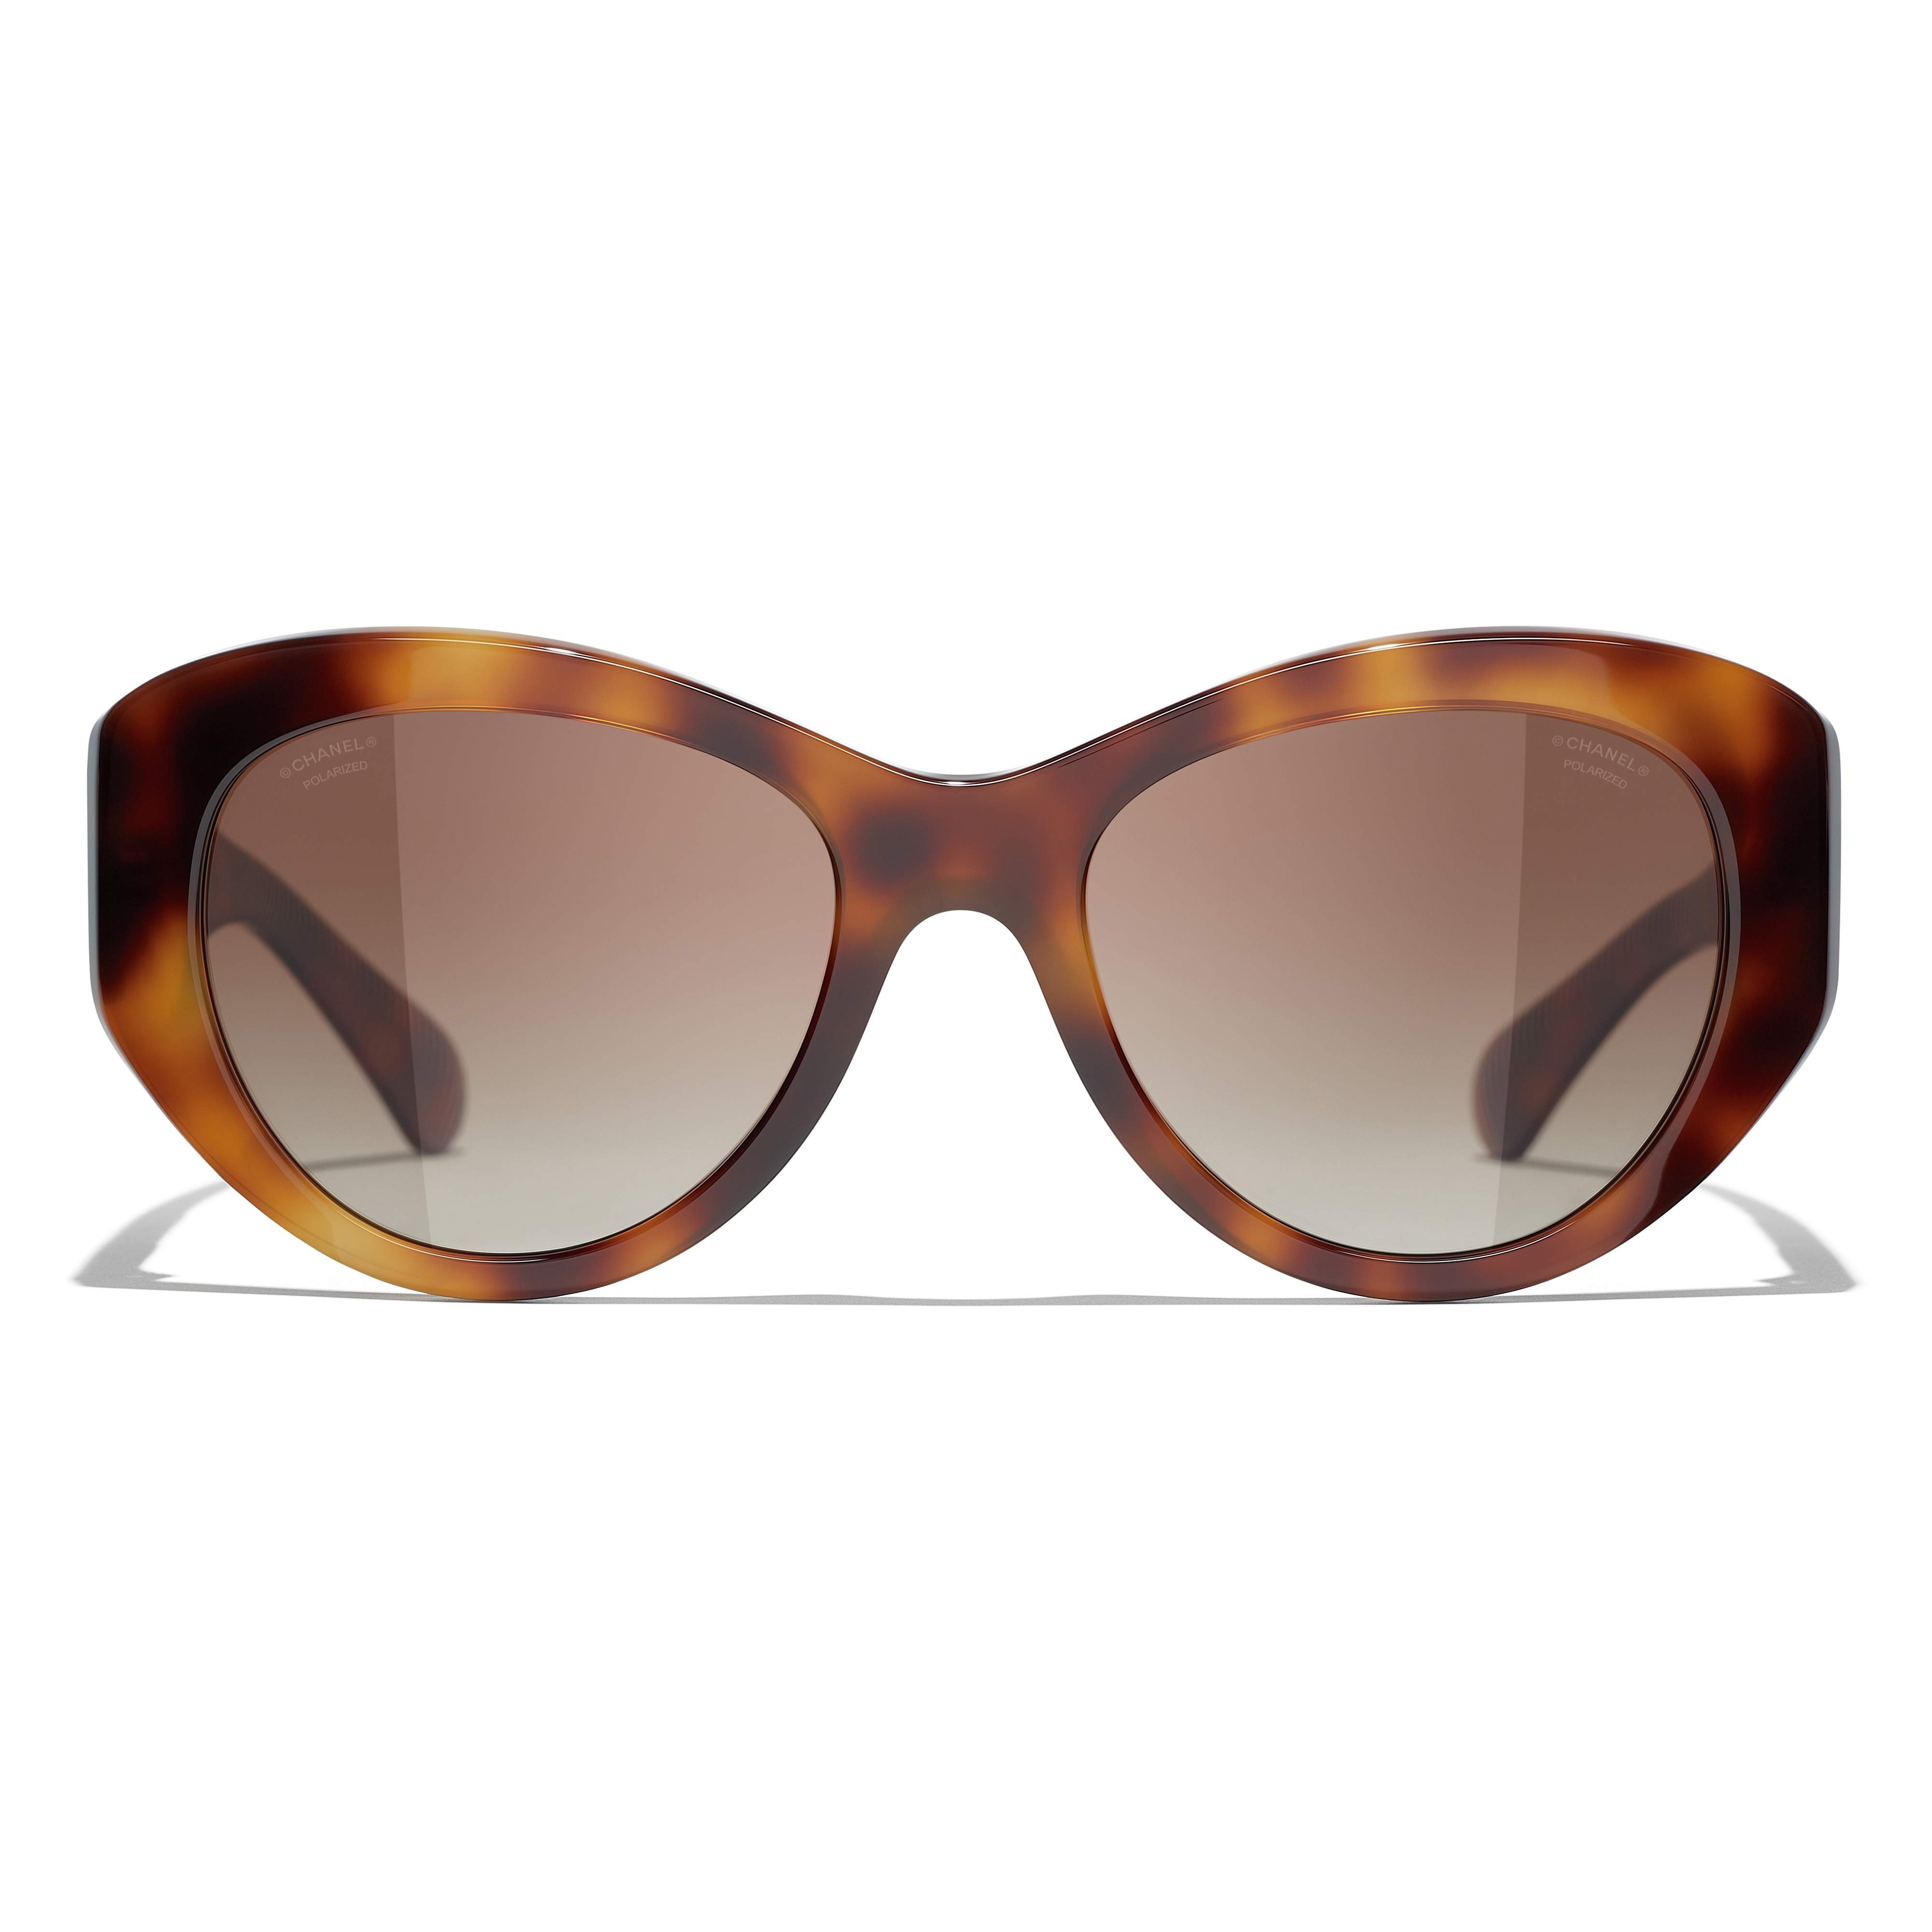 Sunglasses CHANEL CH5492 1295/S9 54-19 Havana in stock, Price 304,17 €